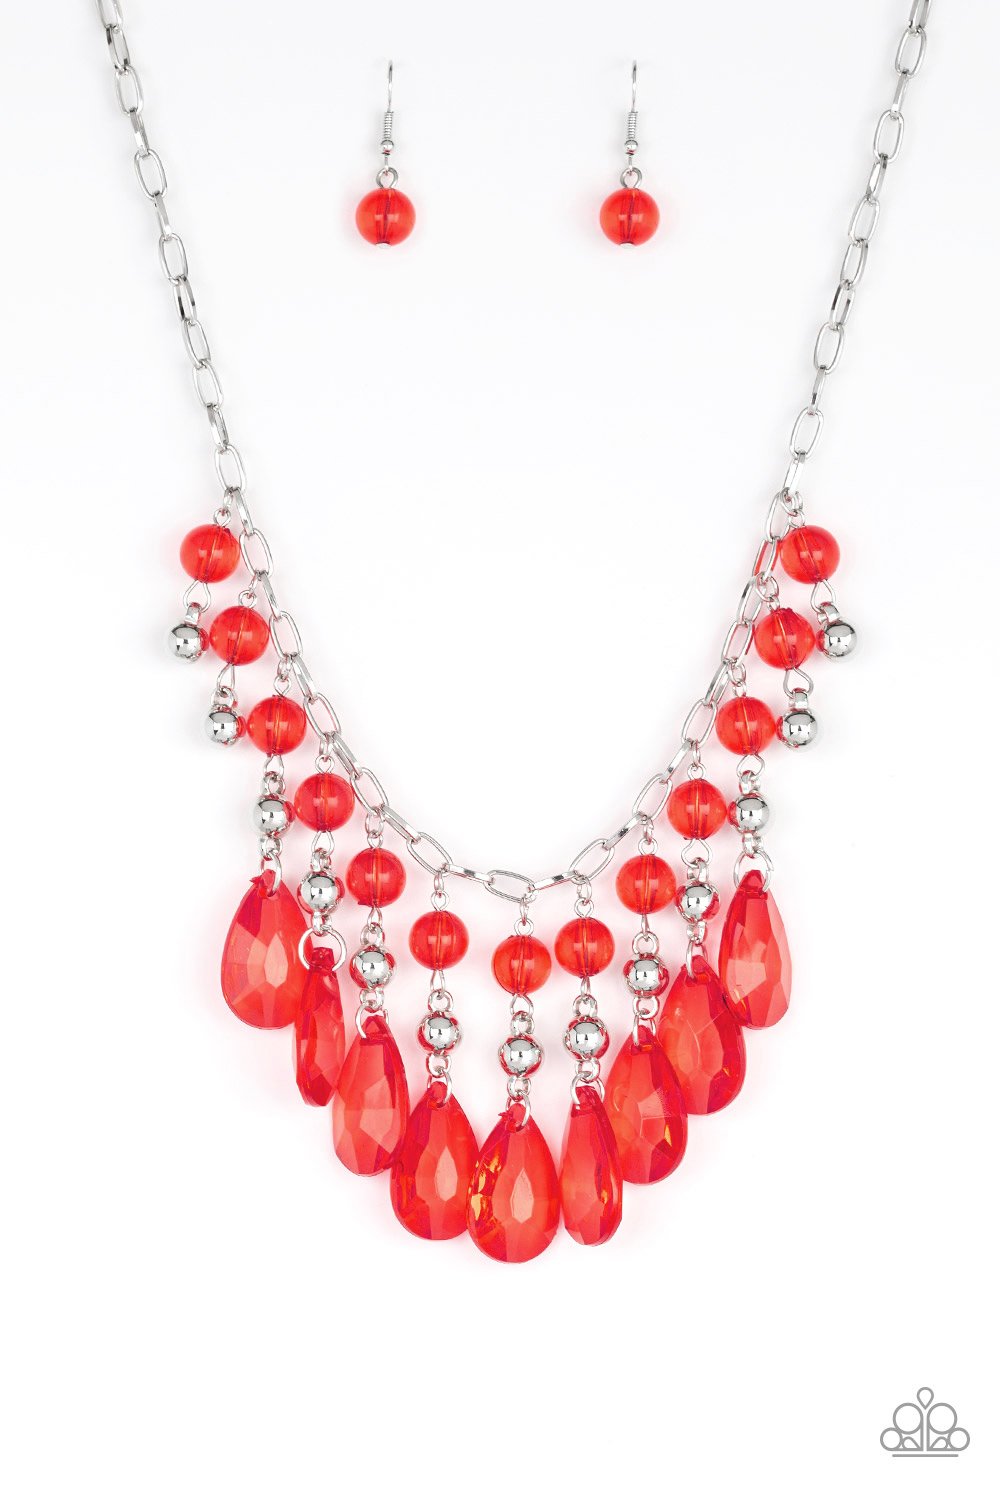 Beauty School Drop Out - Red Glassy Acrylic Teardrop Necklace Set - Princess Glam Shop